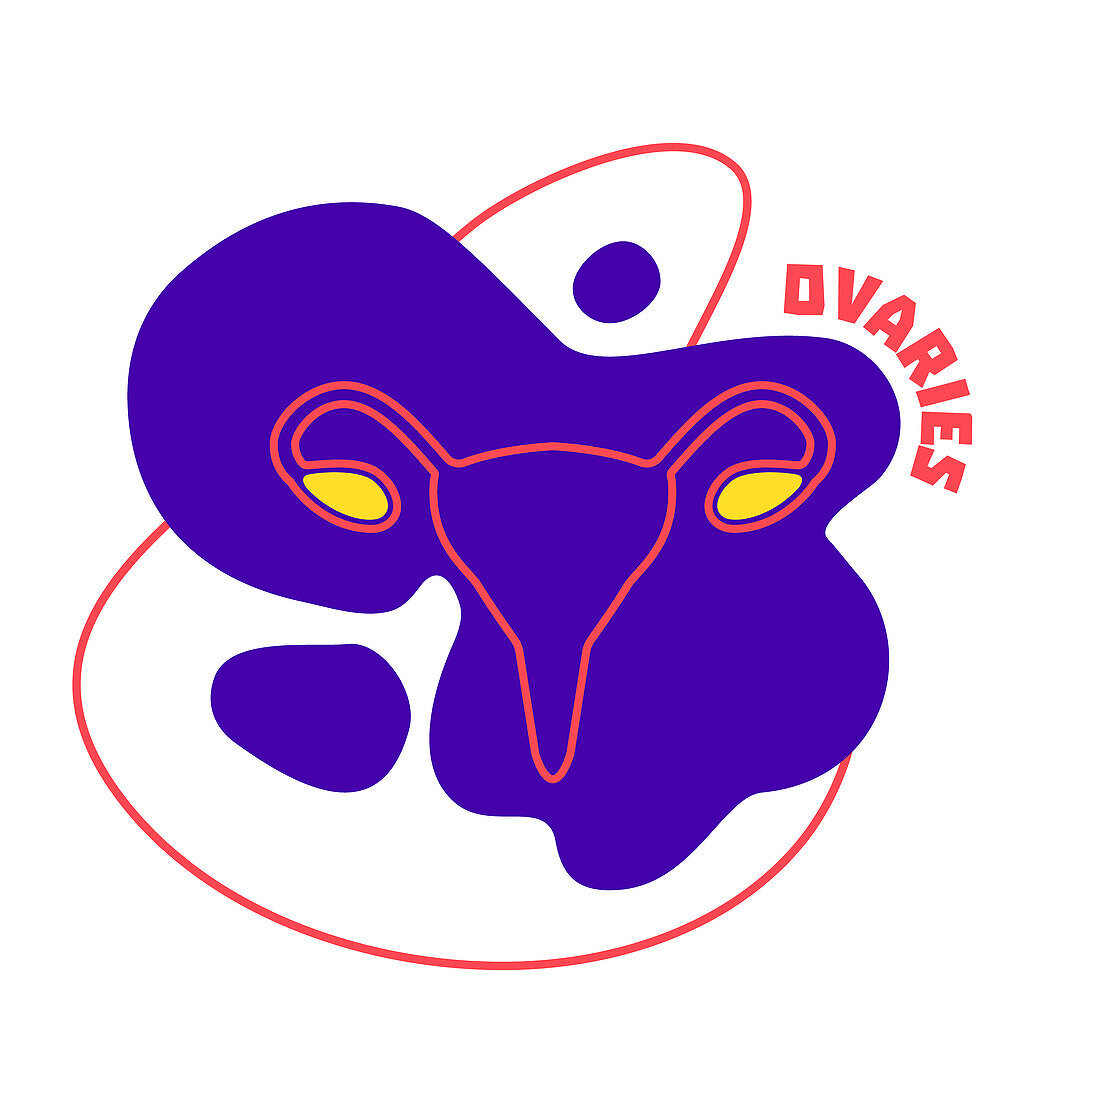 Female reproductive system, illustration